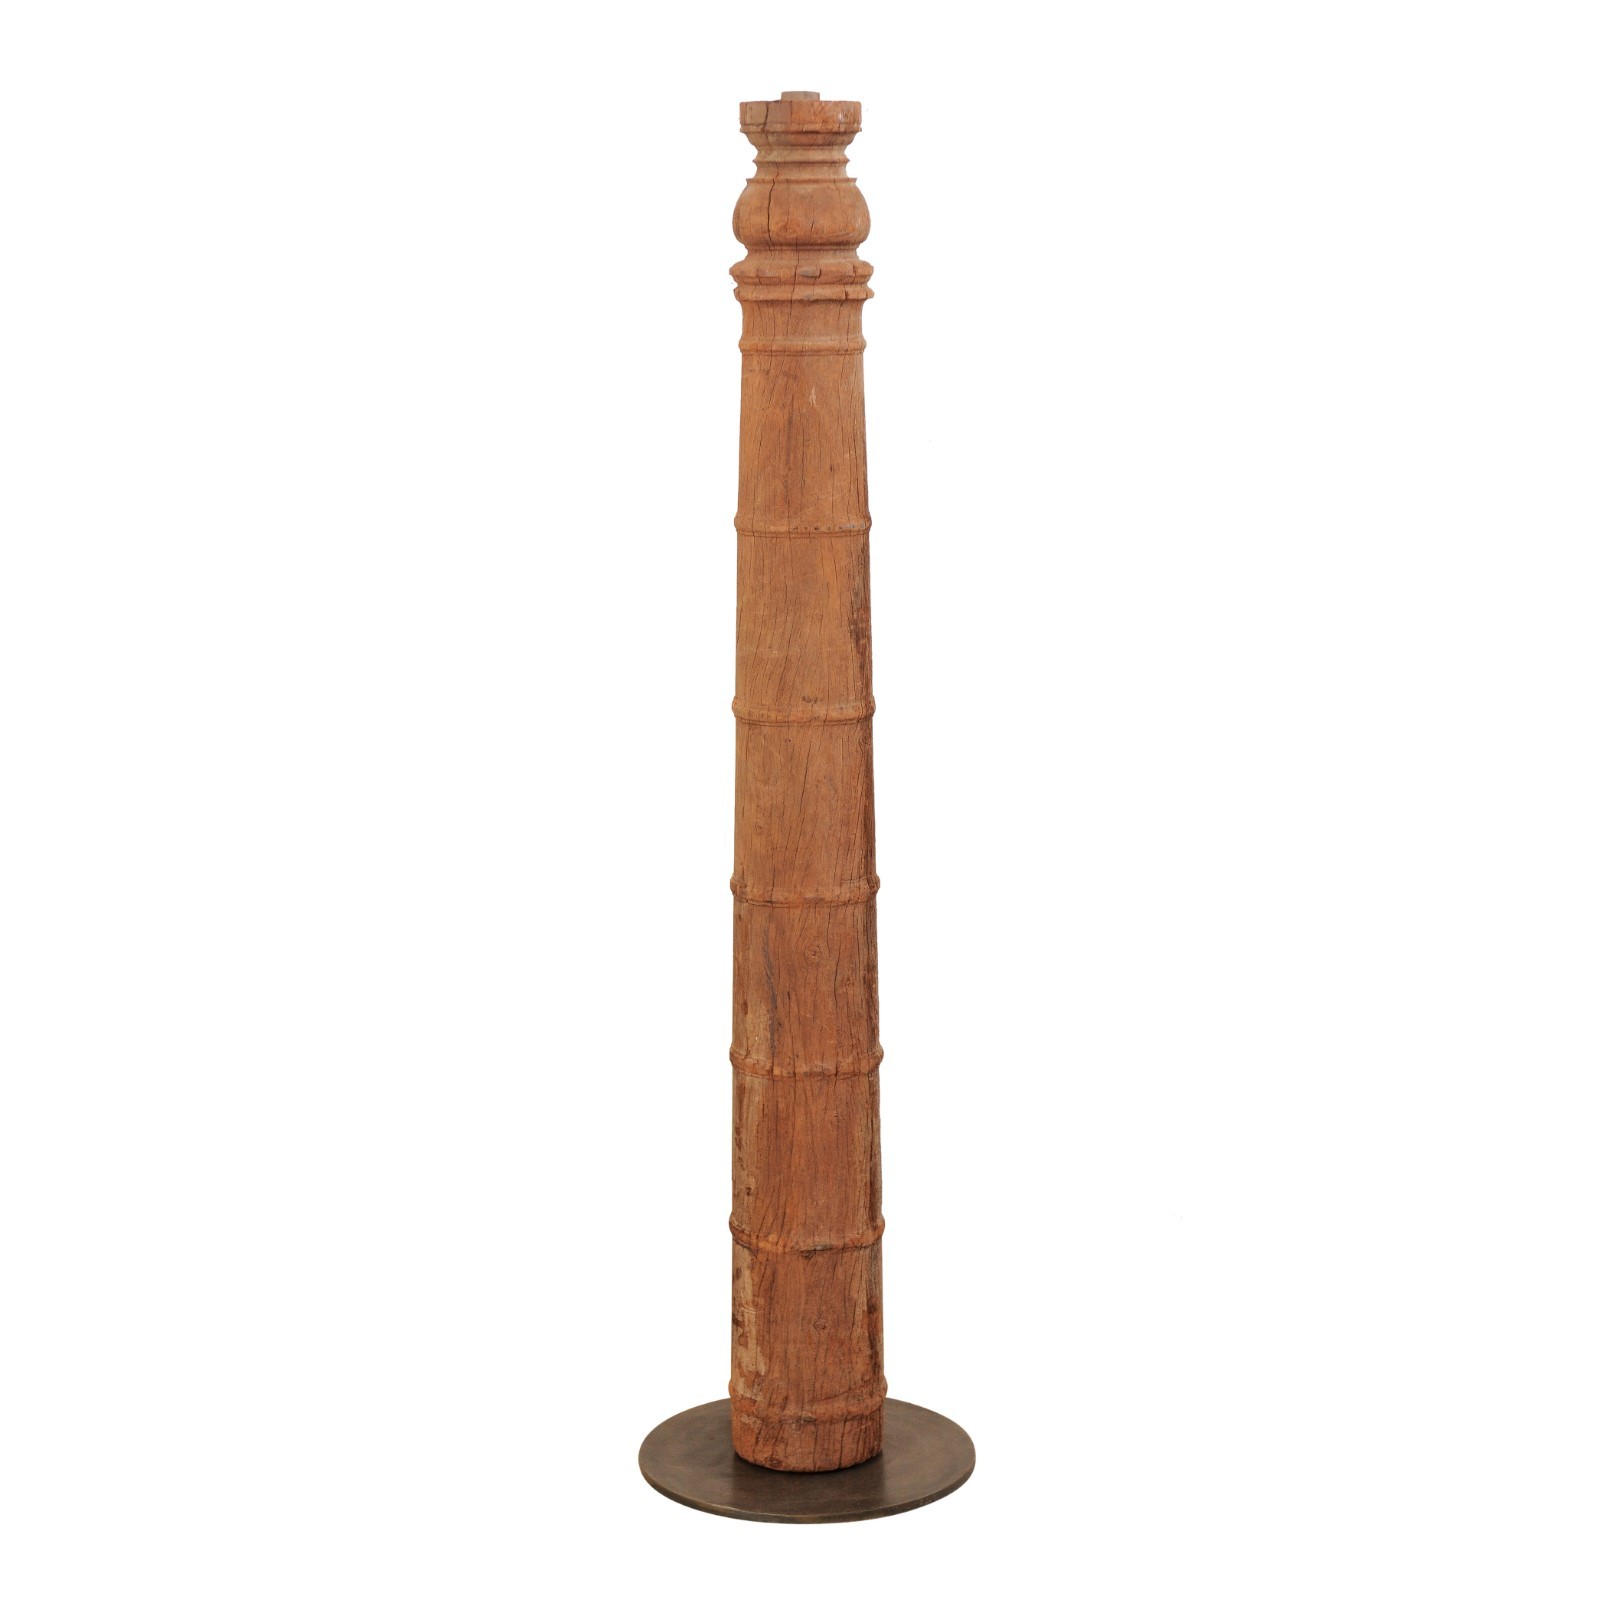 British Colonial Decorative Column, 5.5 FT.